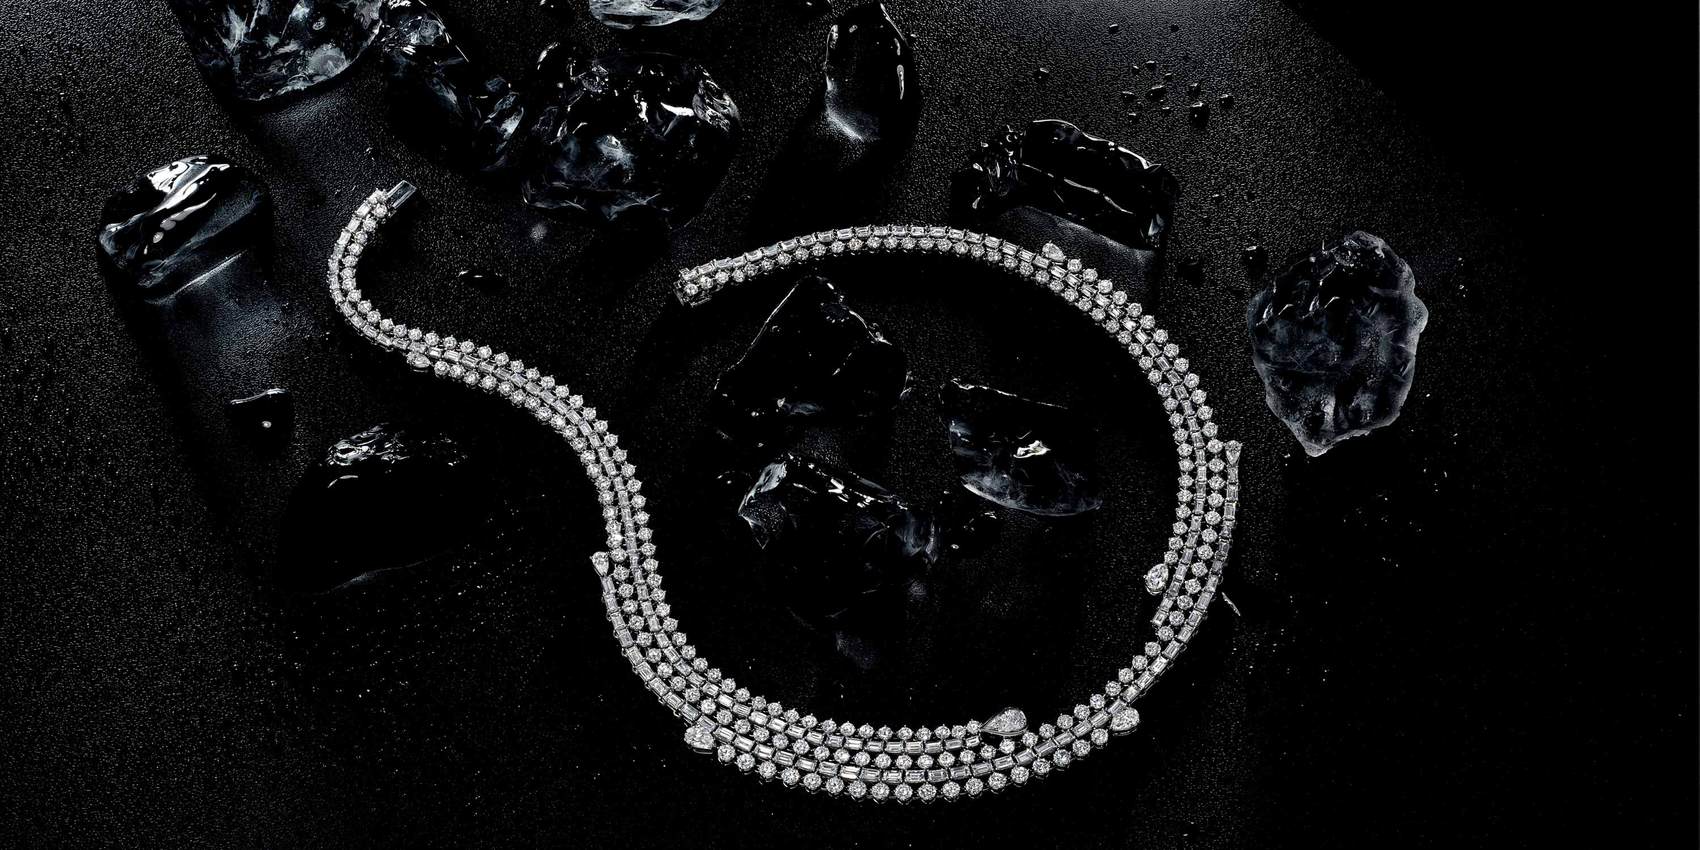 Ожерелье 'Storm' из коллекции 'Iced Zeit' Stenzhorn с бриллиантами. Фото: Simon Martner